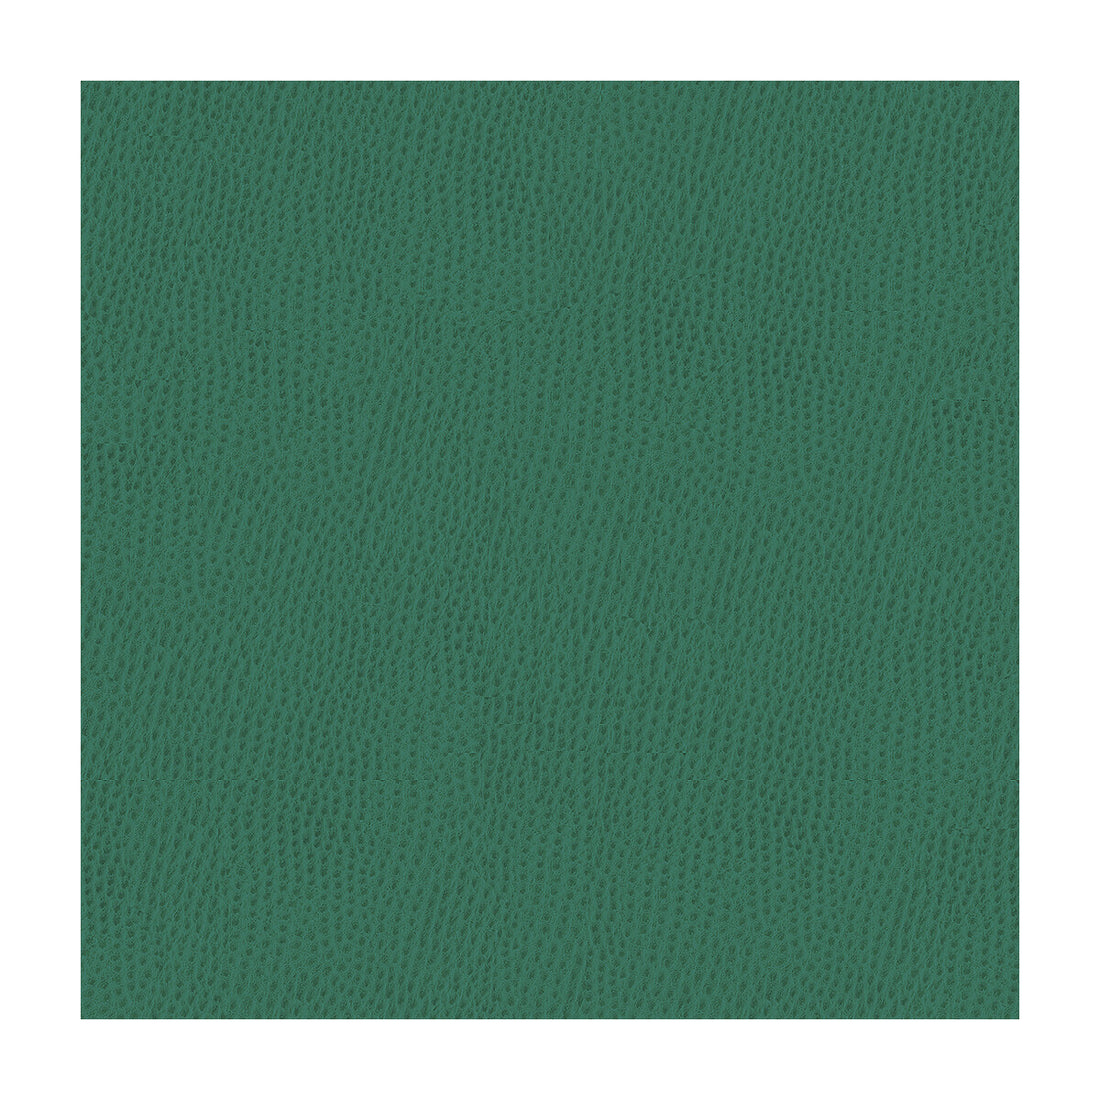 Kravet Contract fabric in belus-35 color - pattern BELUS.35.0 - by Kravet Contract